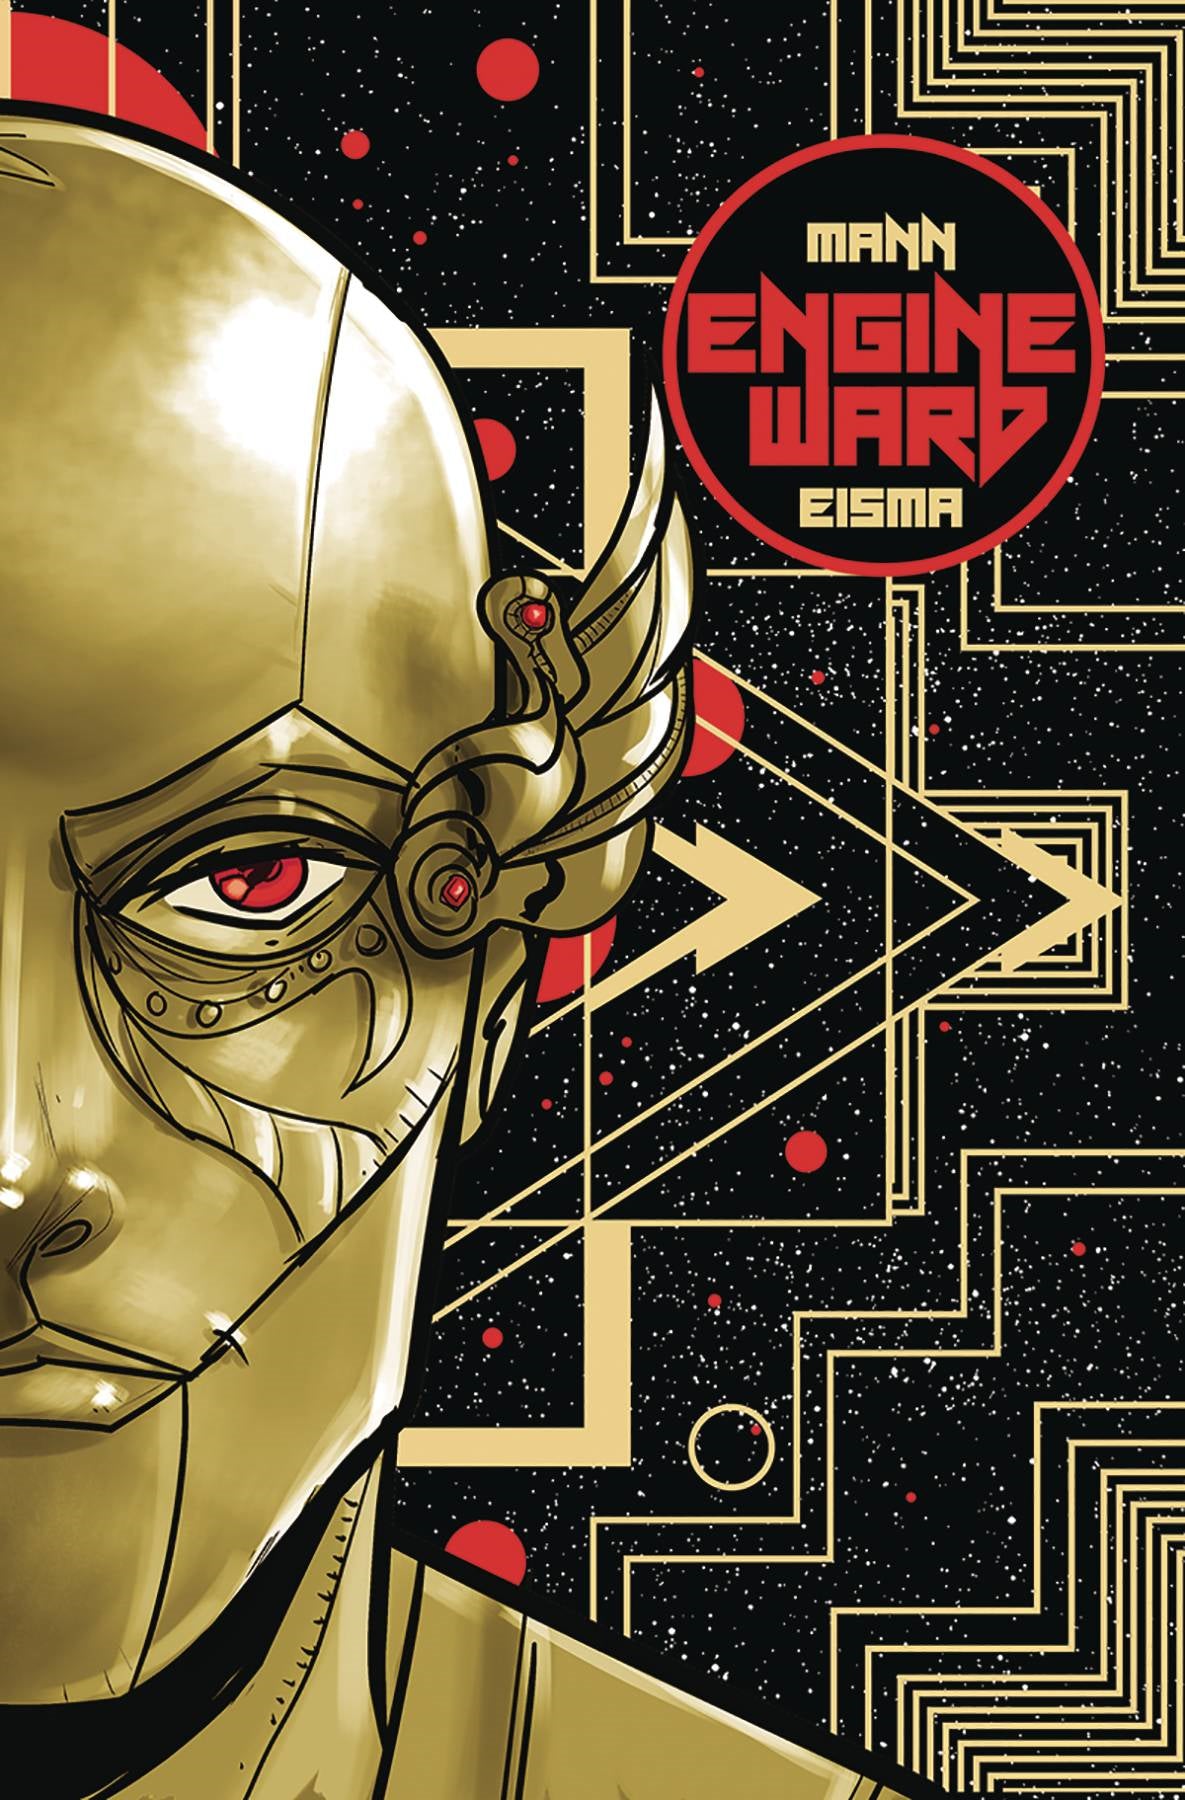 Engineward #1 (Cvr A Eisma) Vault Comics Comic Book 2020